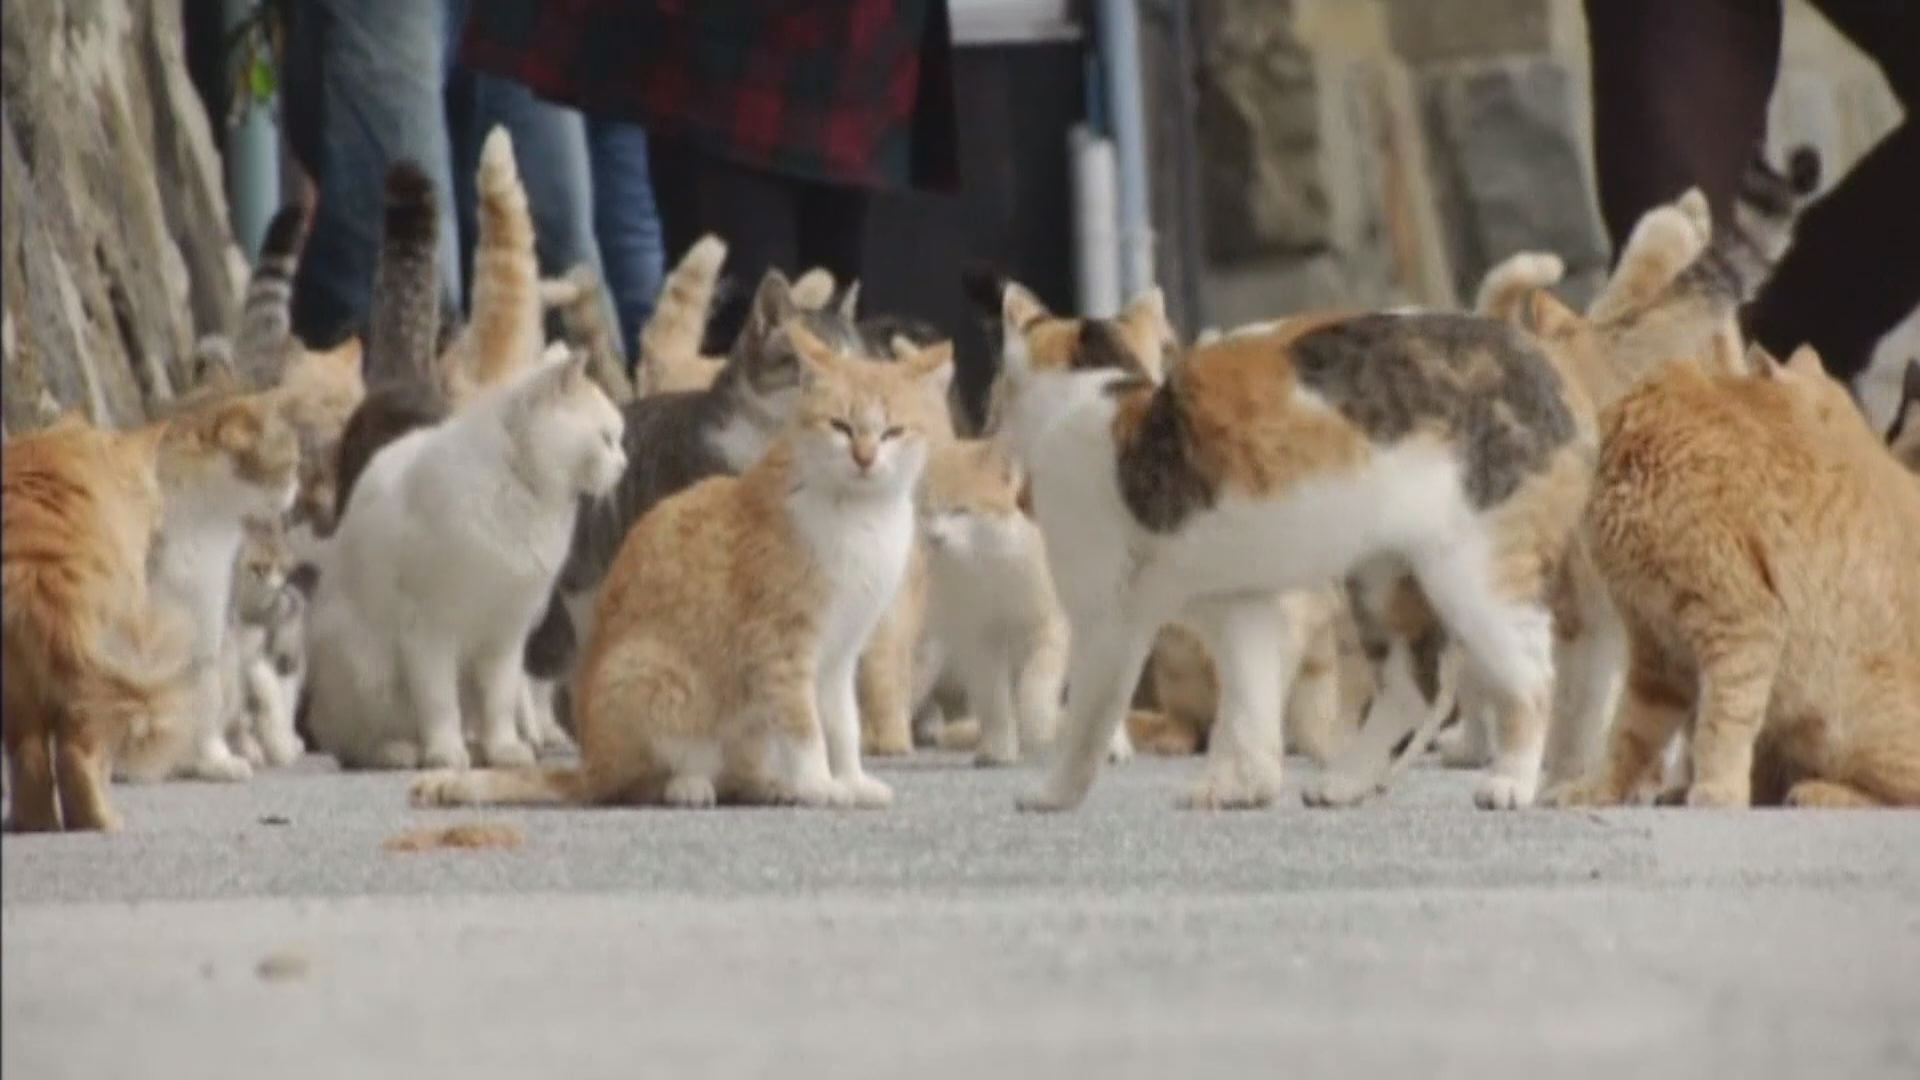 Aoshima: Japan's 'Cat Island' Where Felines Outnumber Humans 36 to 1